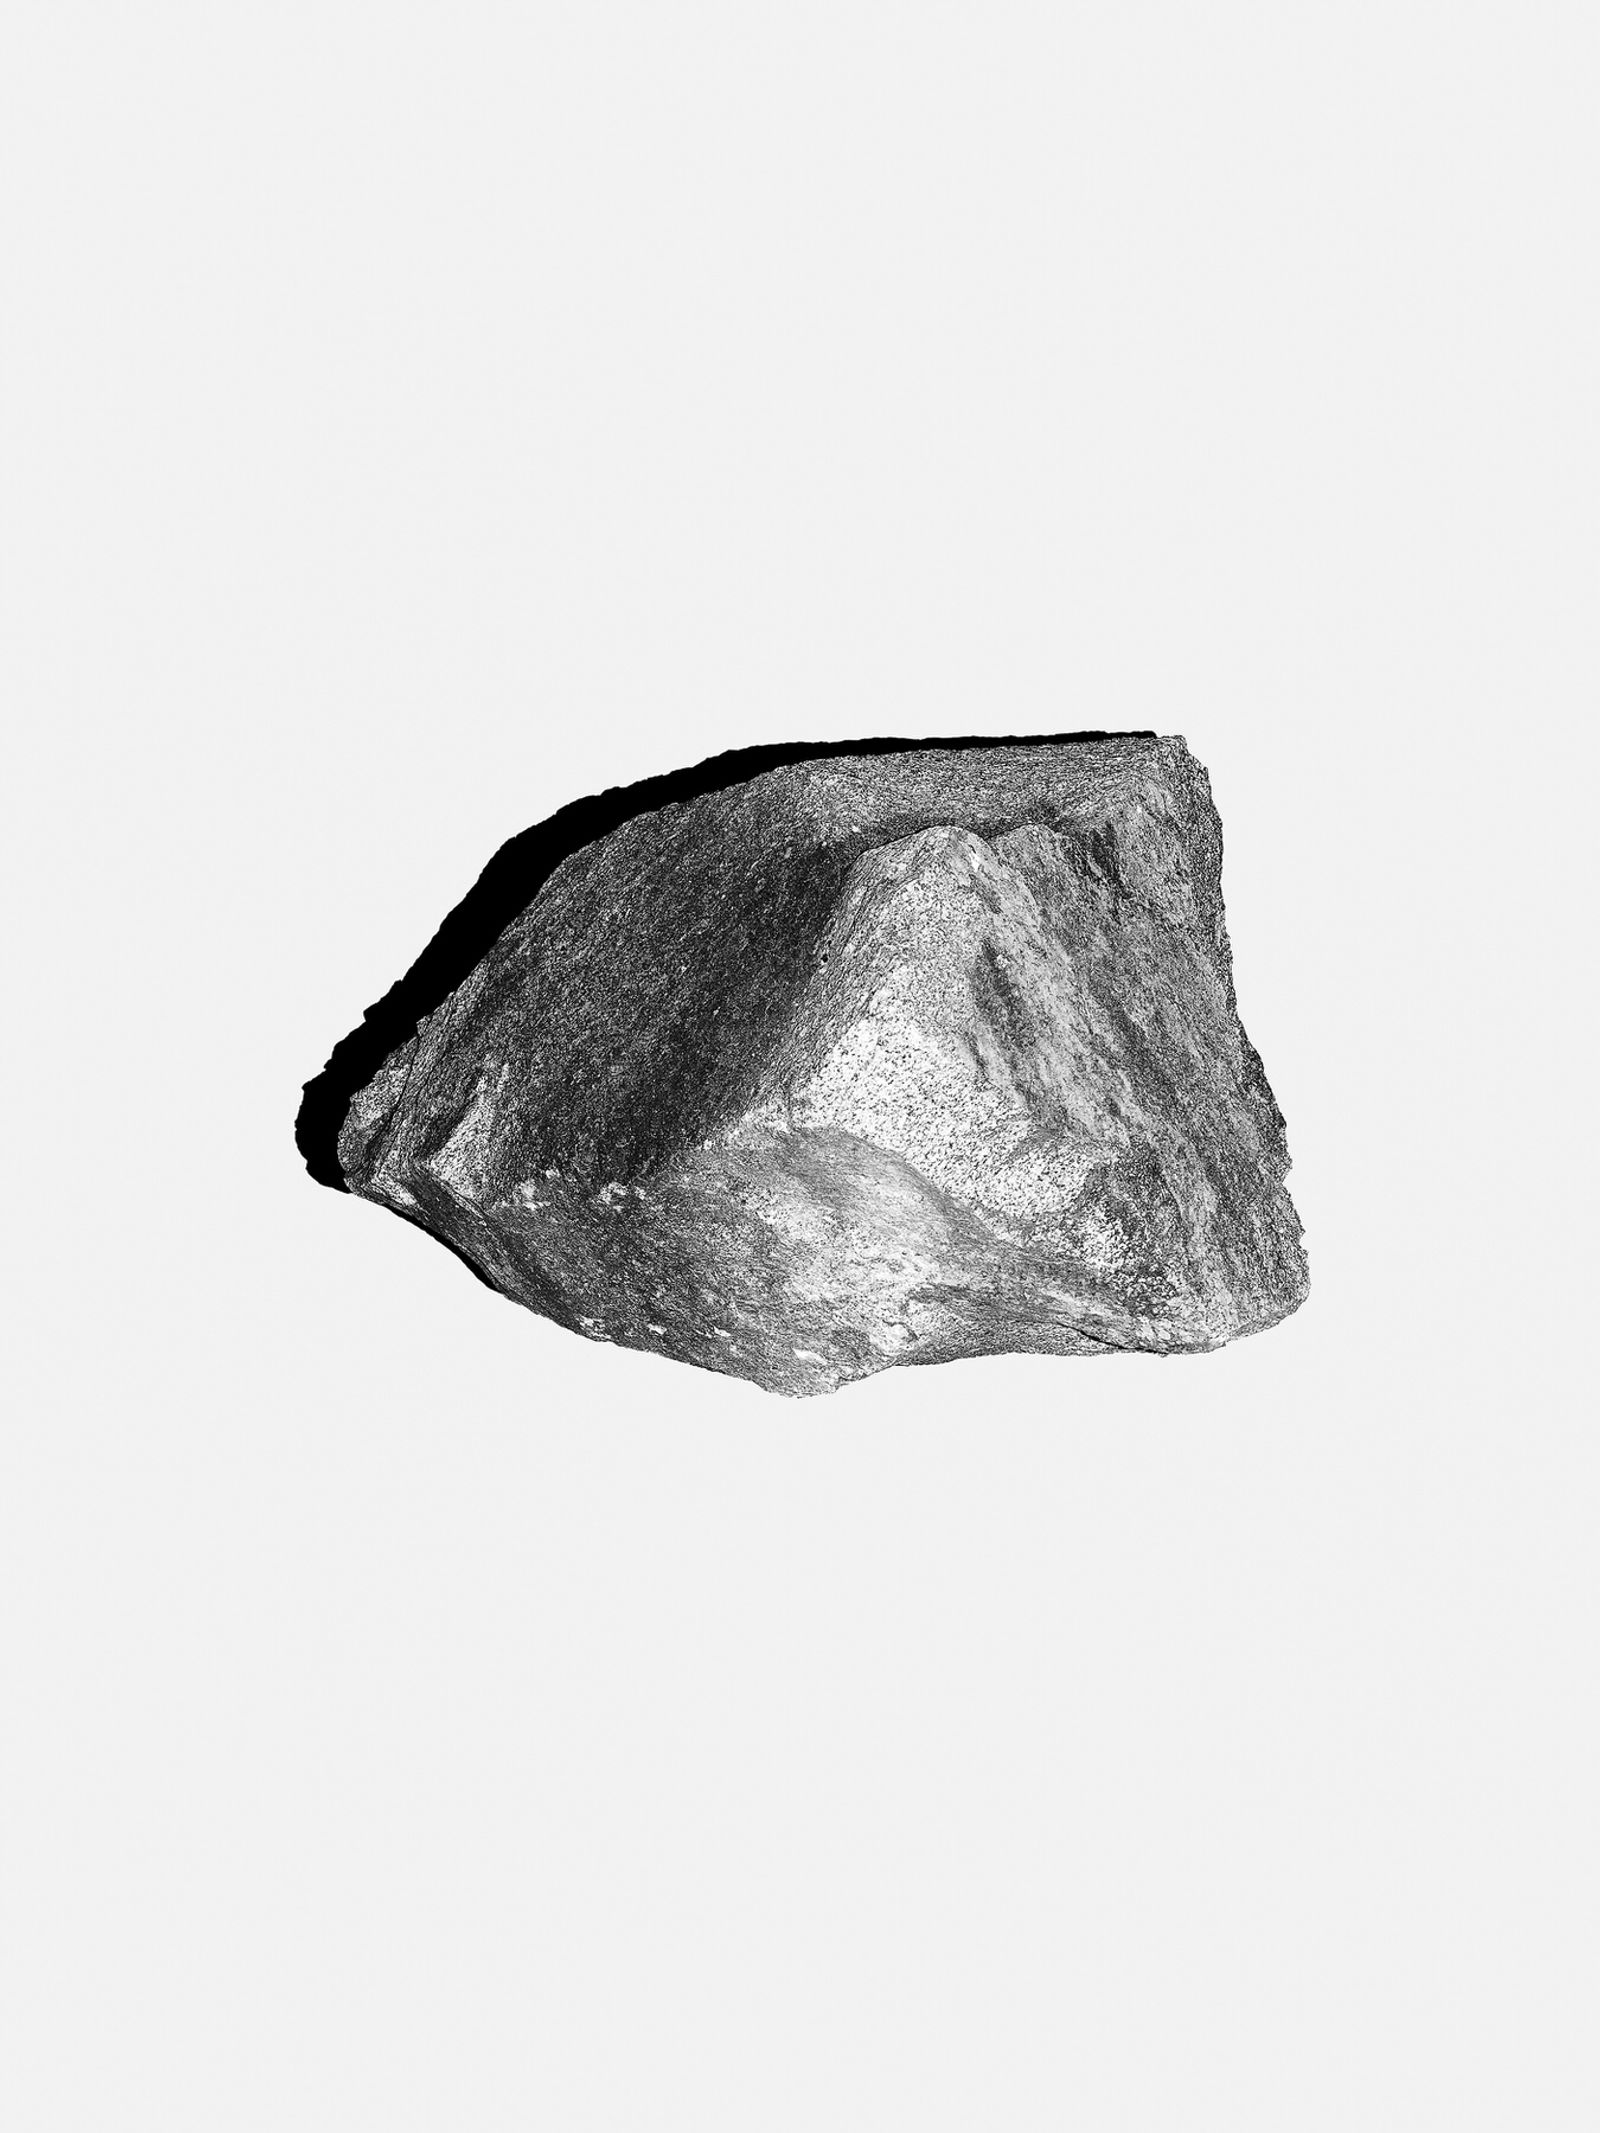 © Felix Schöppner - Asteroid-B